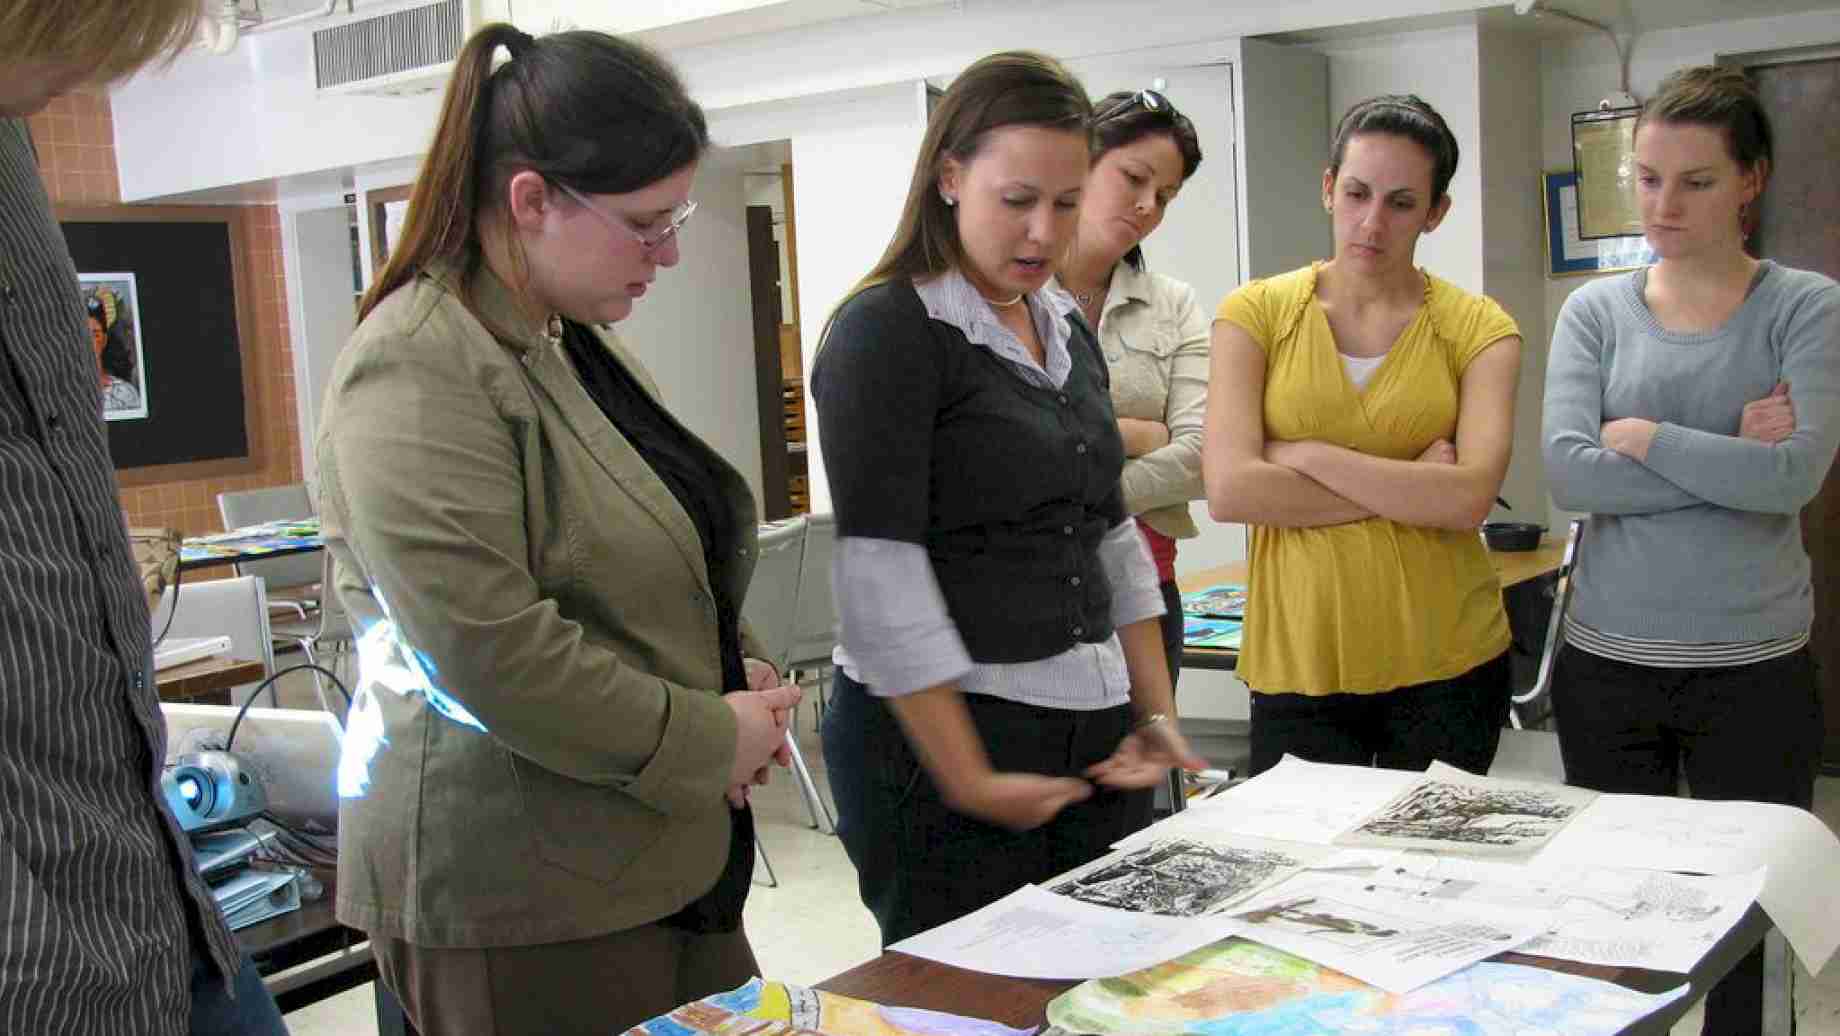 Art education student teachers meet to discuss student art from each of their internship school placements.